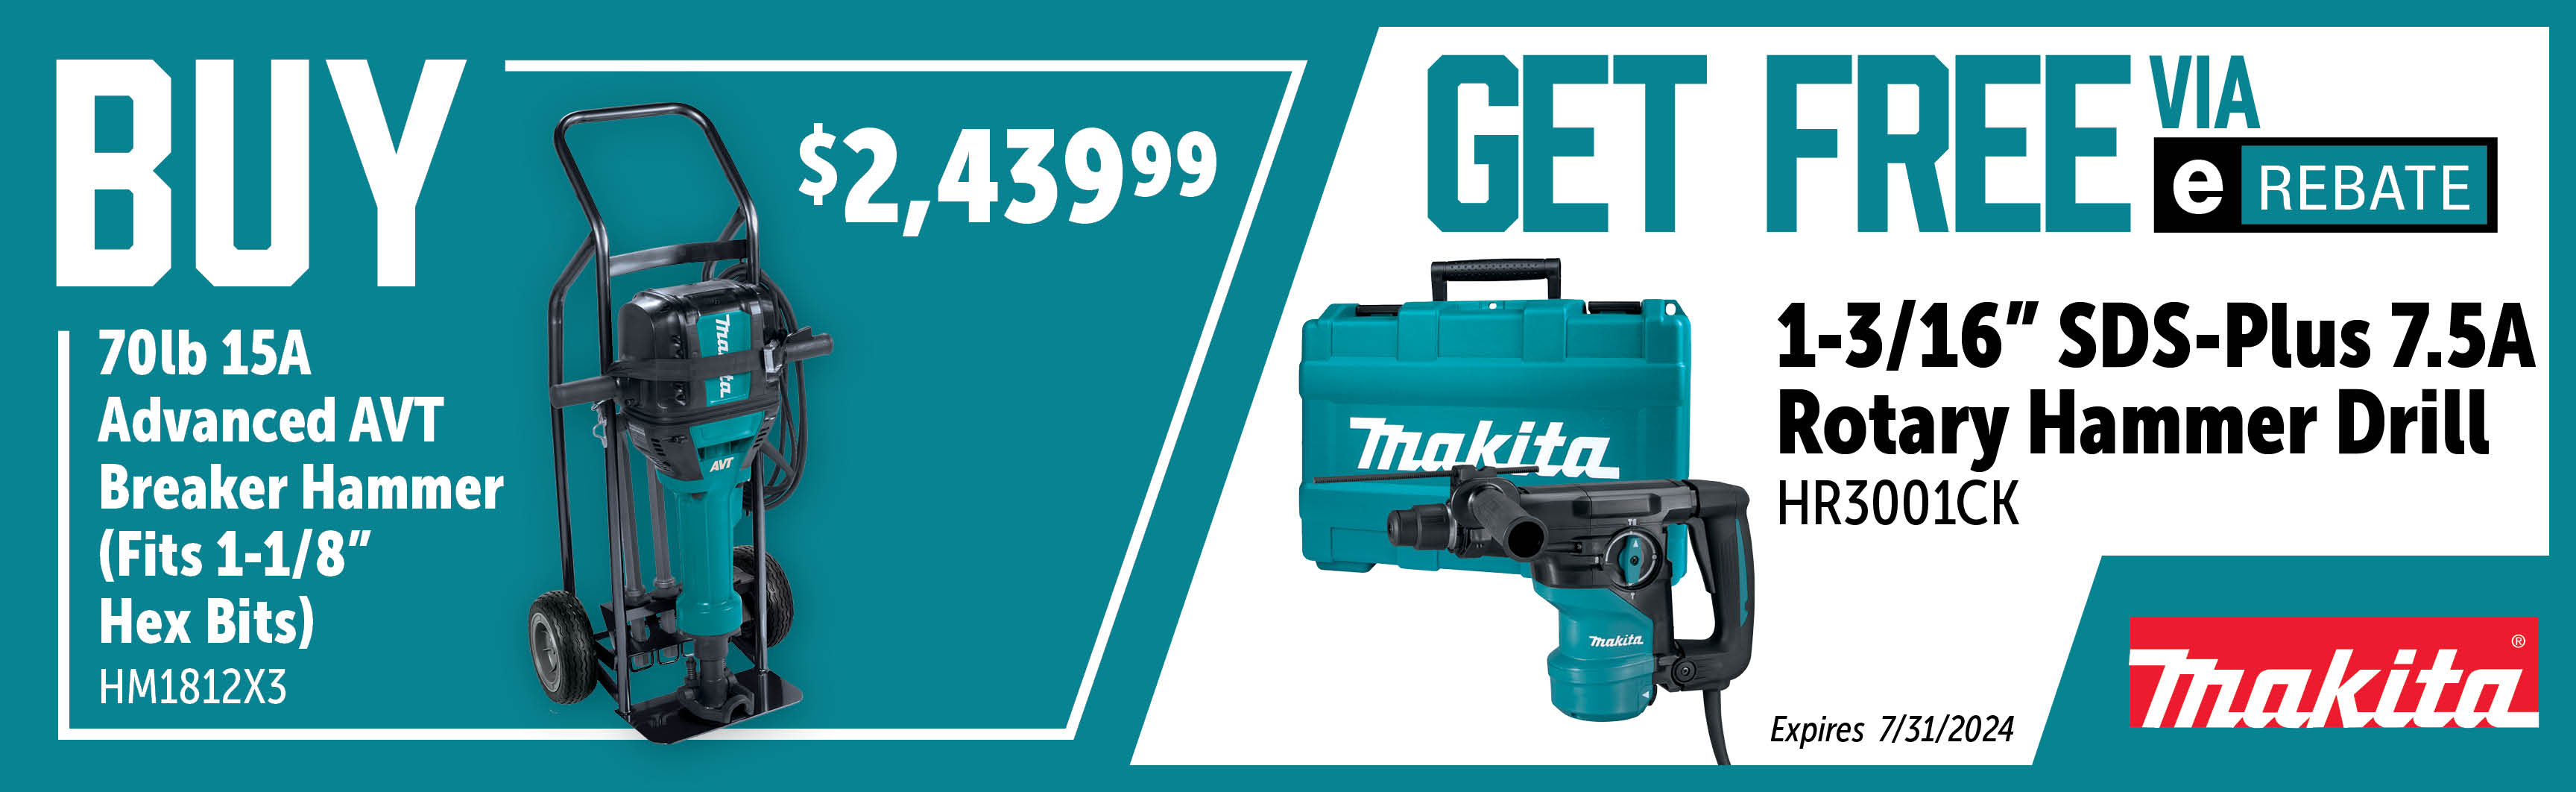 Makita May - July: Buy a HM1812X3 and Get a Free HR3001CK Via E-Rebate